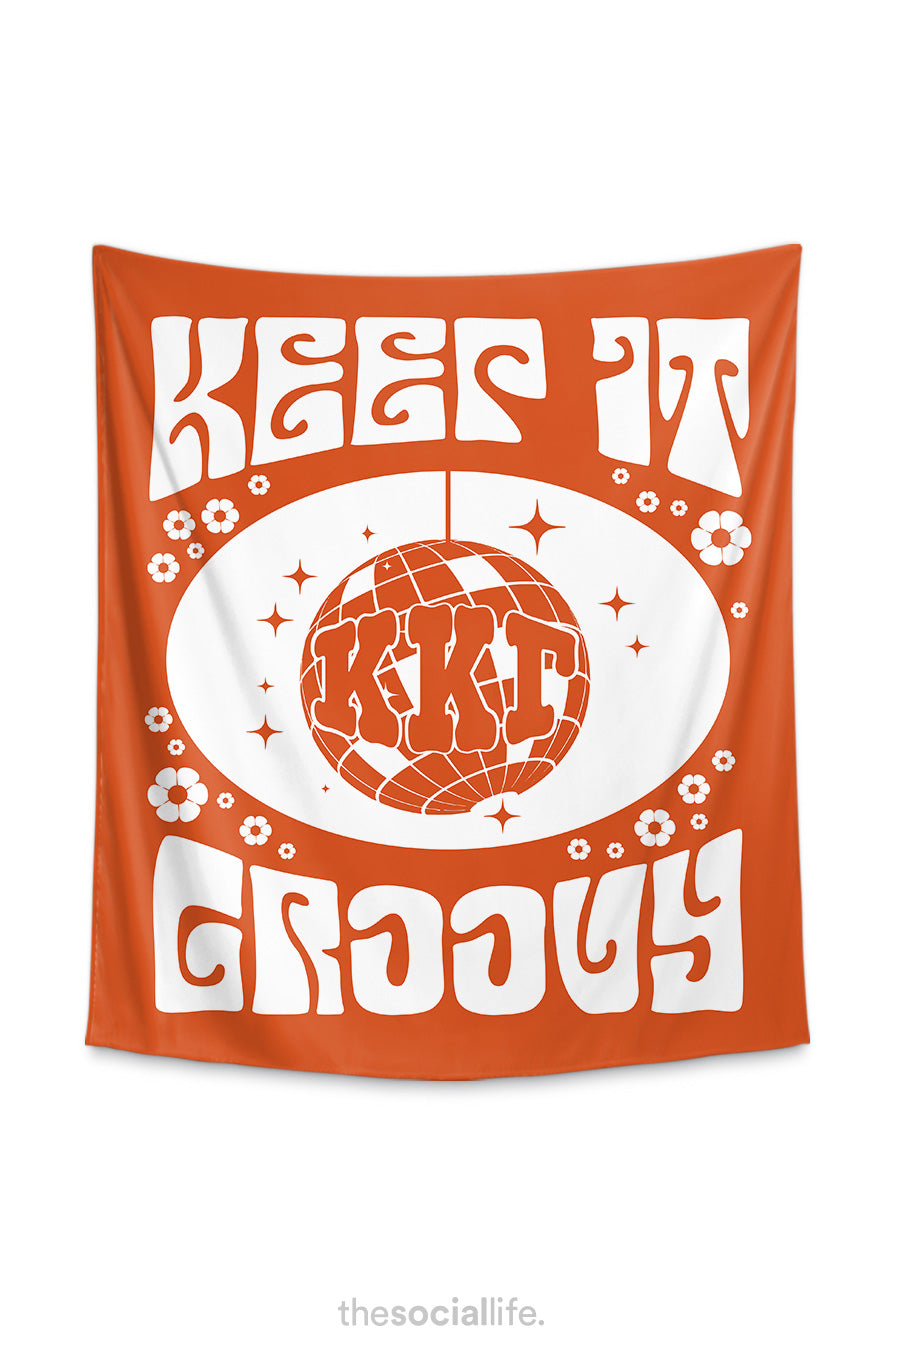 anmodning Sammensætning mel Kappa Kappa Gamma Keep it Groovy Tapestry – The Social Life